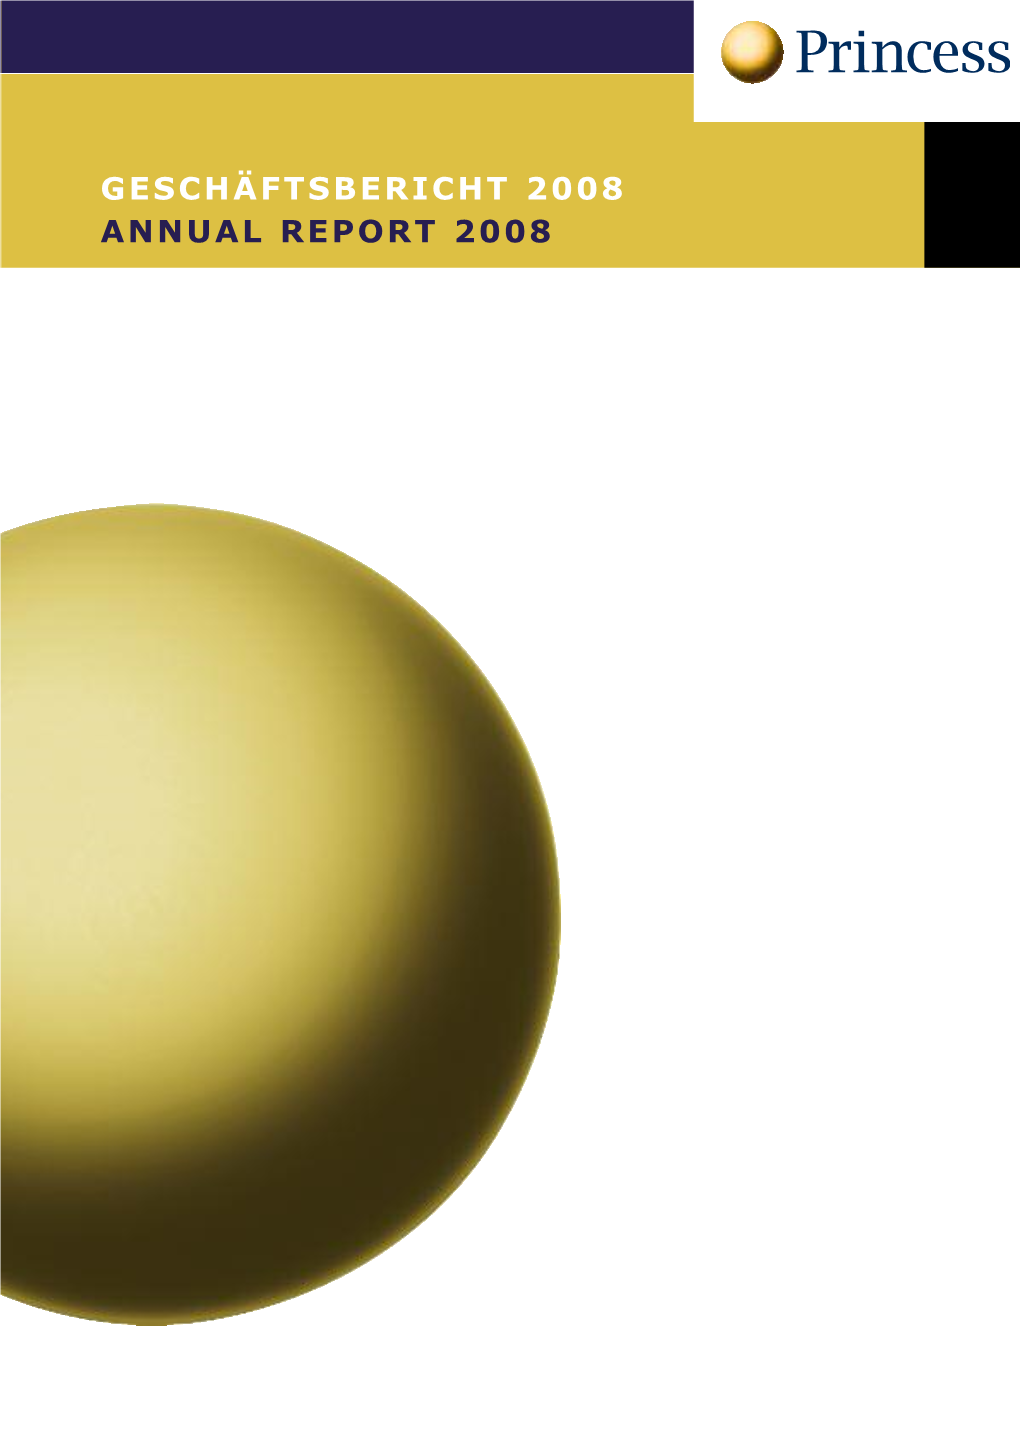 Geschäftsbericht 2008 Annual Report 2008 Üsbteartbelmiecnk T of the Investment Manager